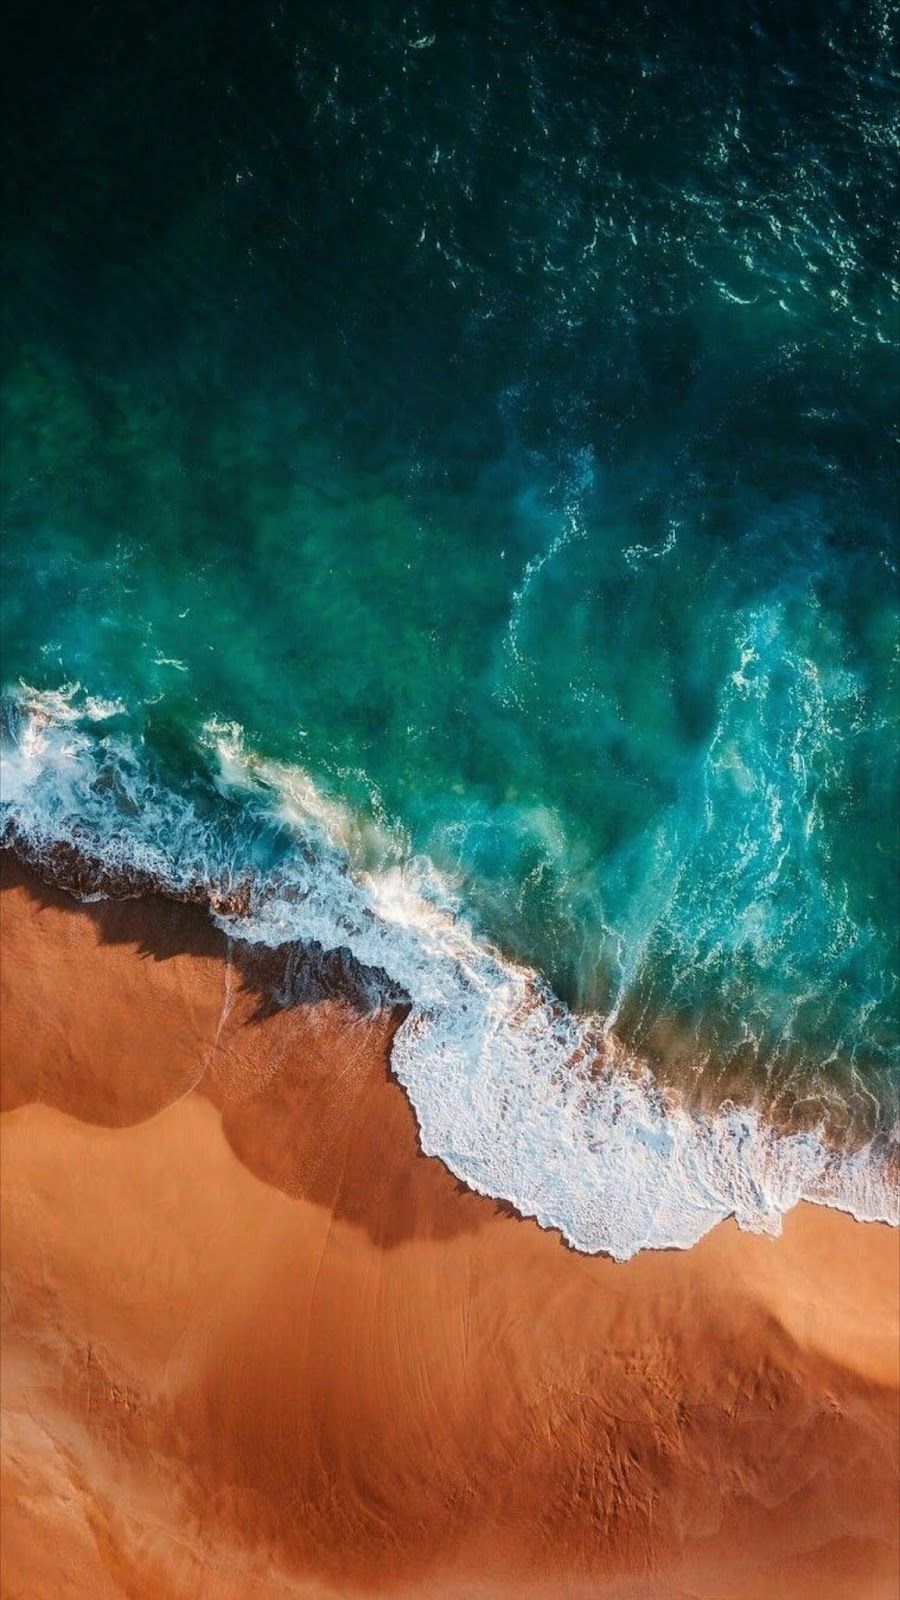 ocean waves wallpaper #wallpaper #iphone #android #background #followme. Ocean wallpaper, Waves wallpaper, Beach wallpaper